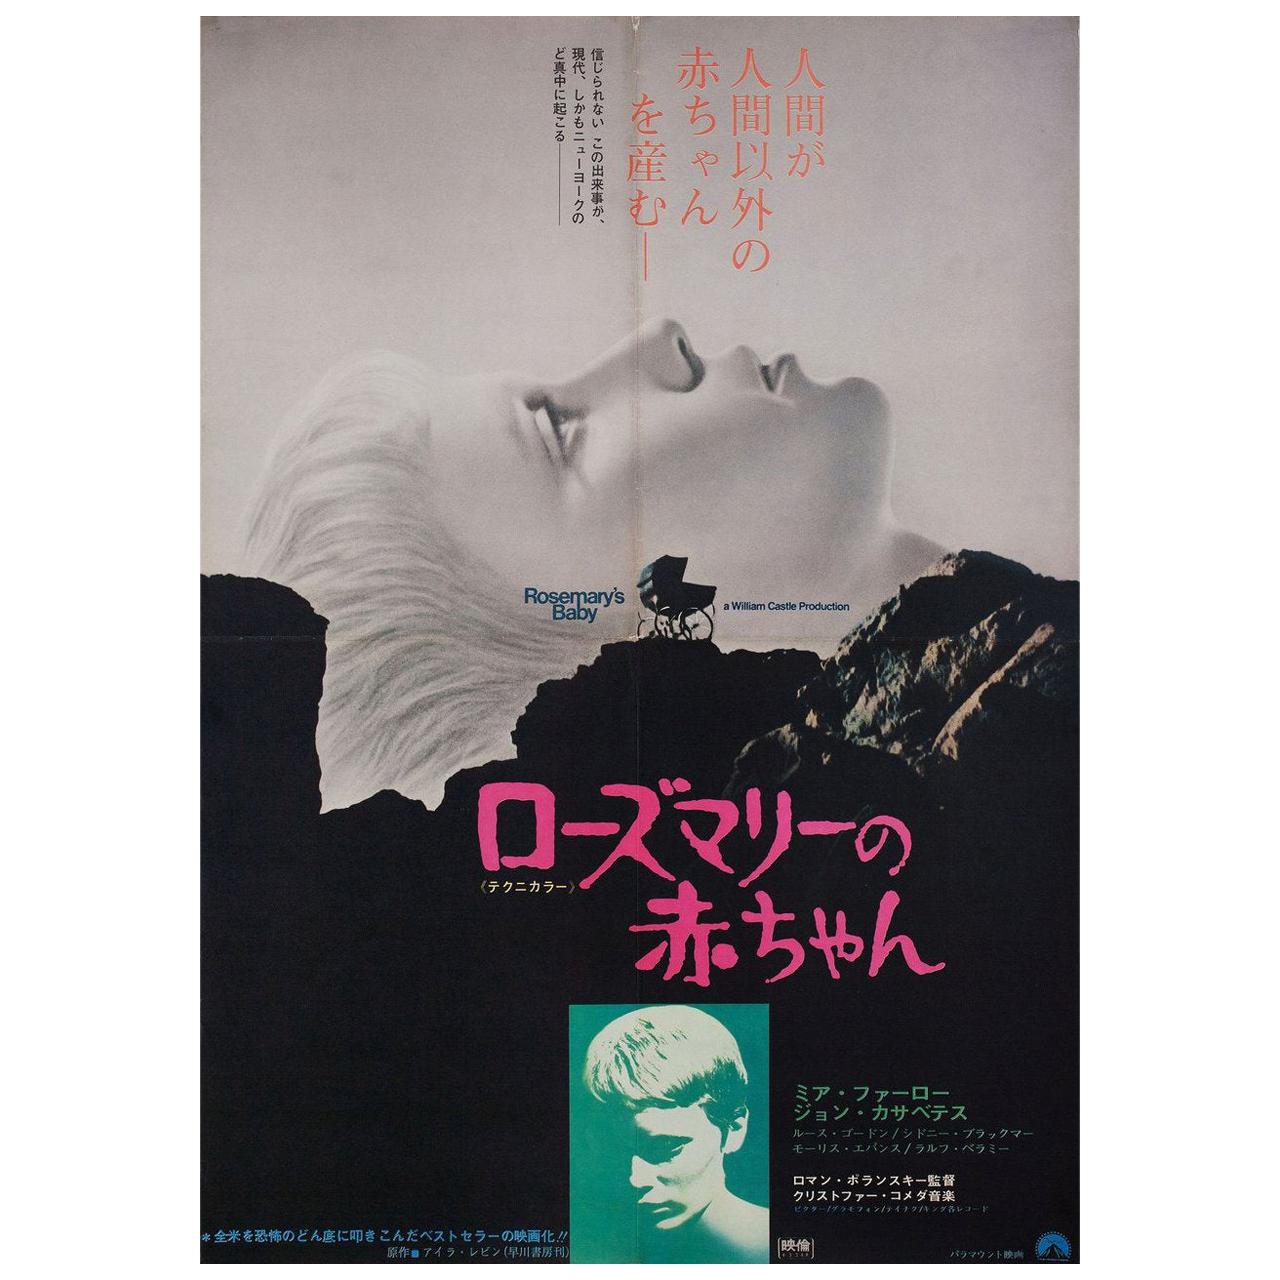 "Rosemary's Baby" 1968 Japanese B2 Film Poster